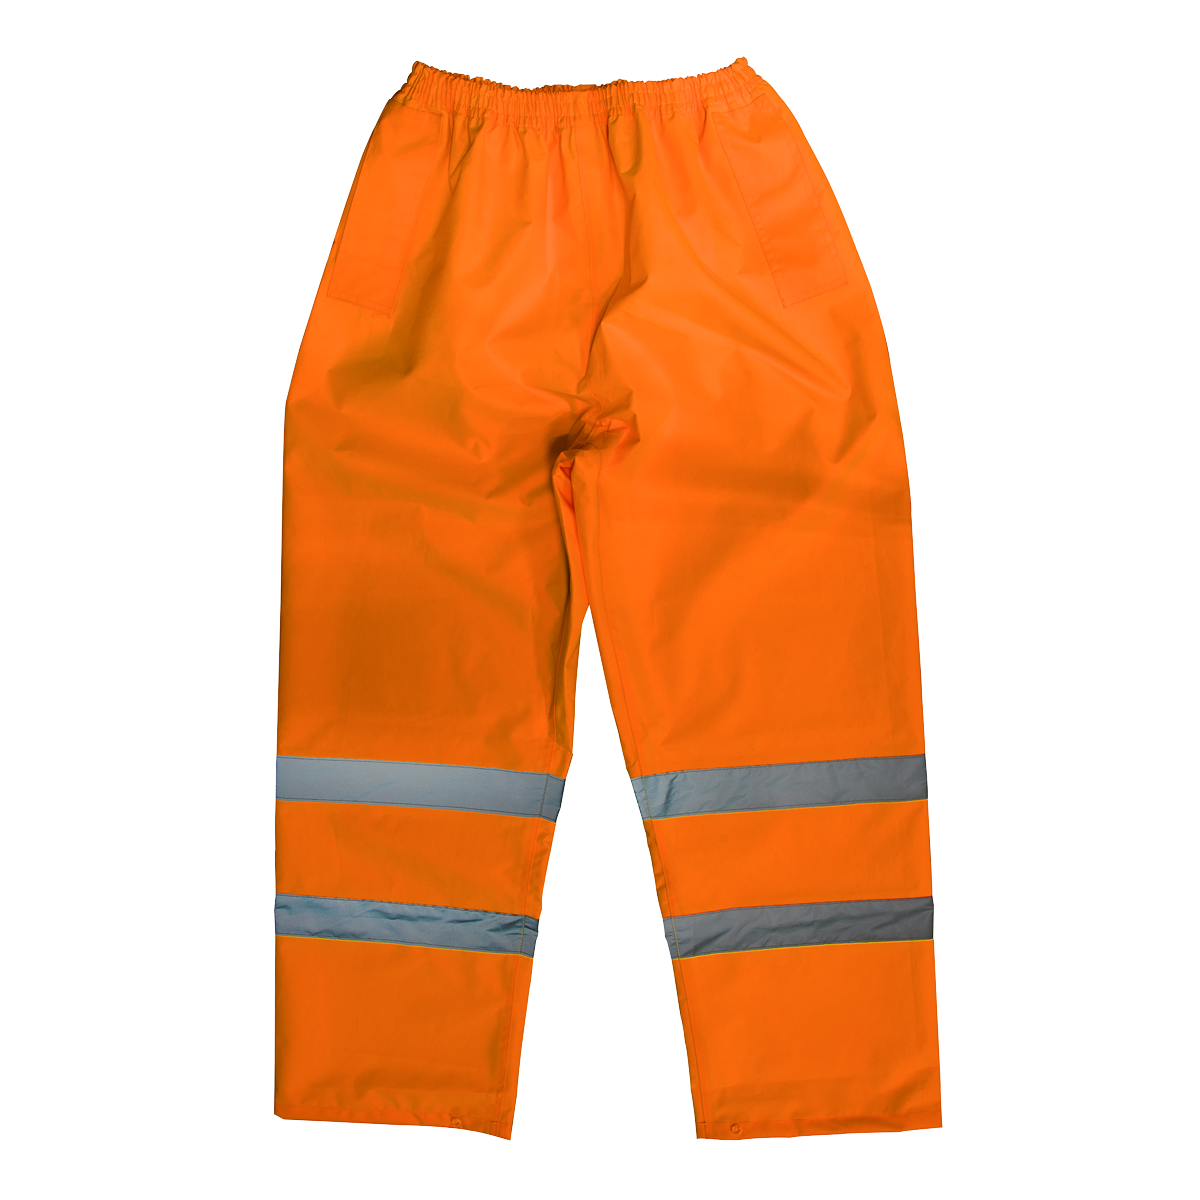 Hi-Vis Orange Waterproof Trousers - Large - 807LO - Farming Parts